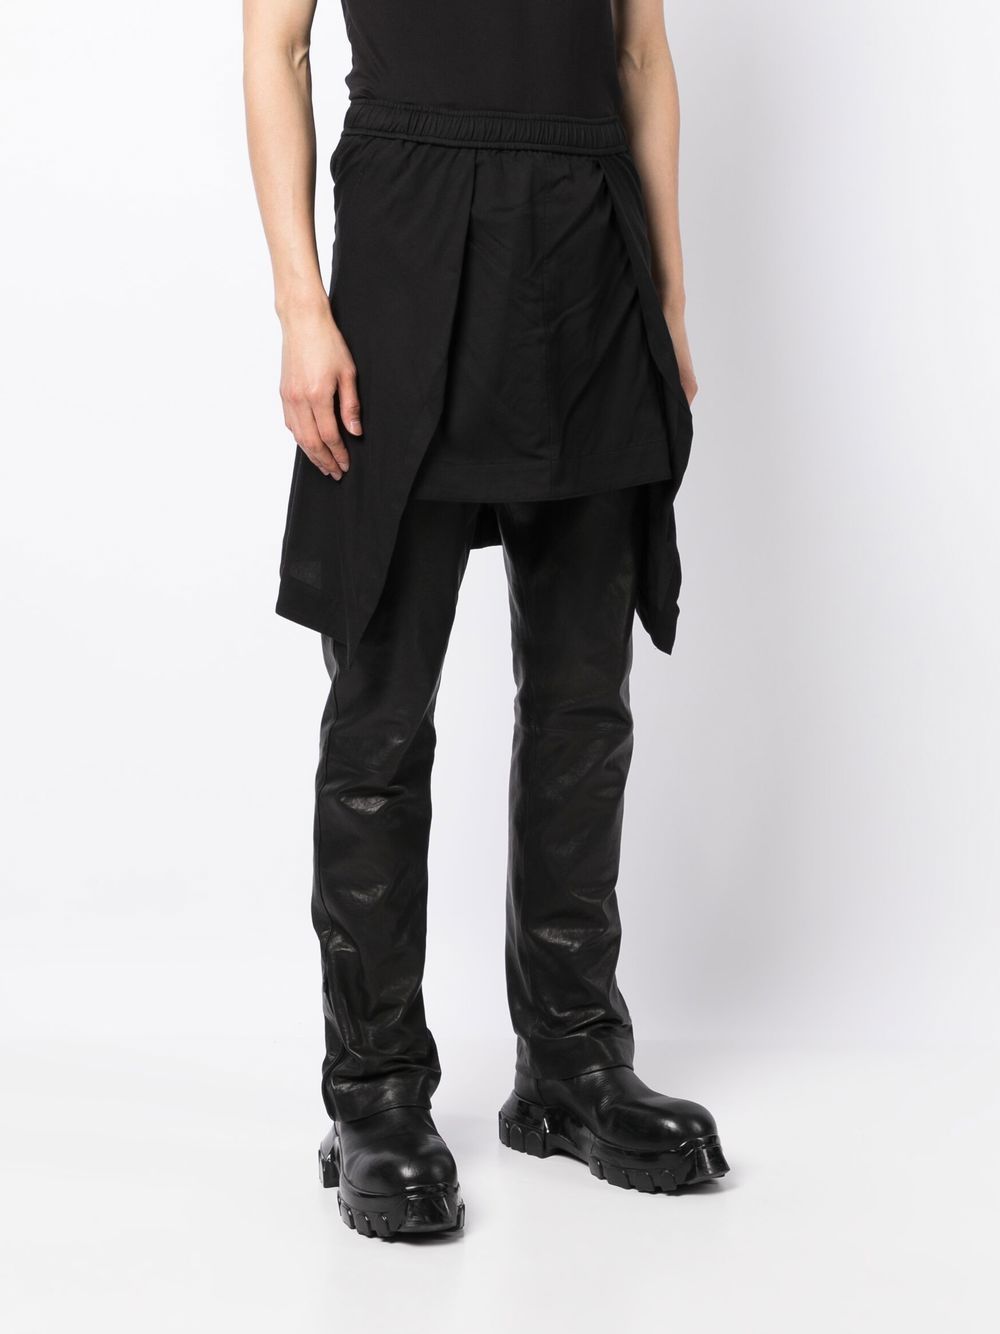 Julius - skirt-layered Trousers - Men - Rayon/Cotton - 2 - Black